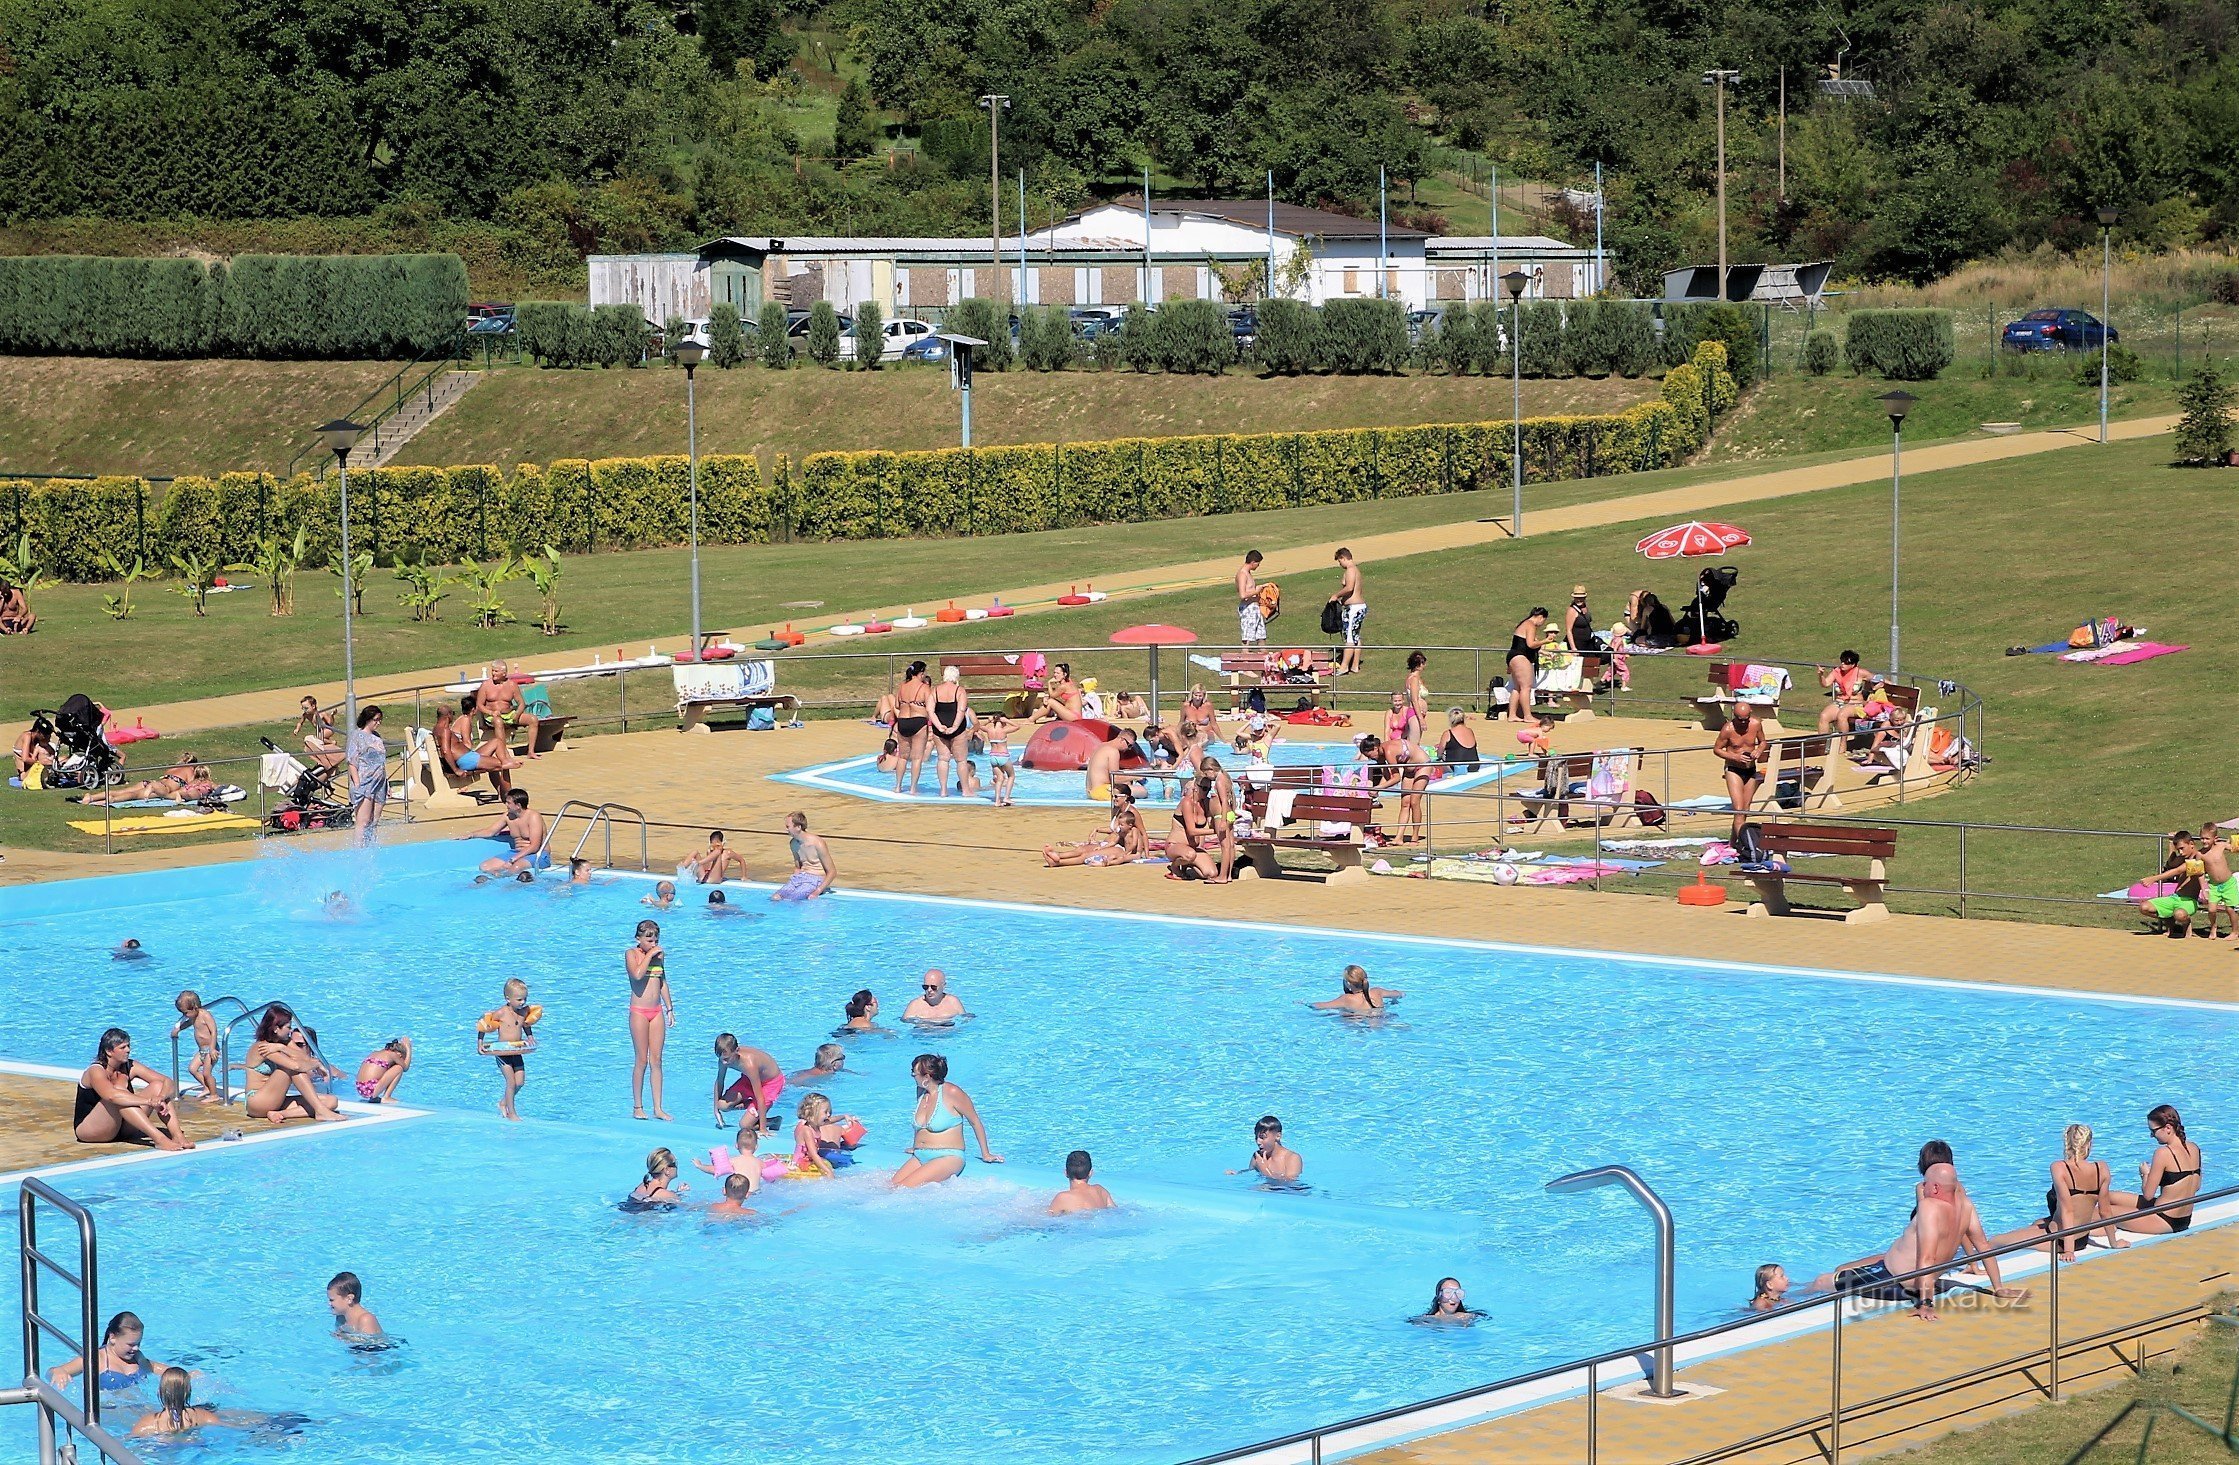 Bučovice - swimmingpool i 2017